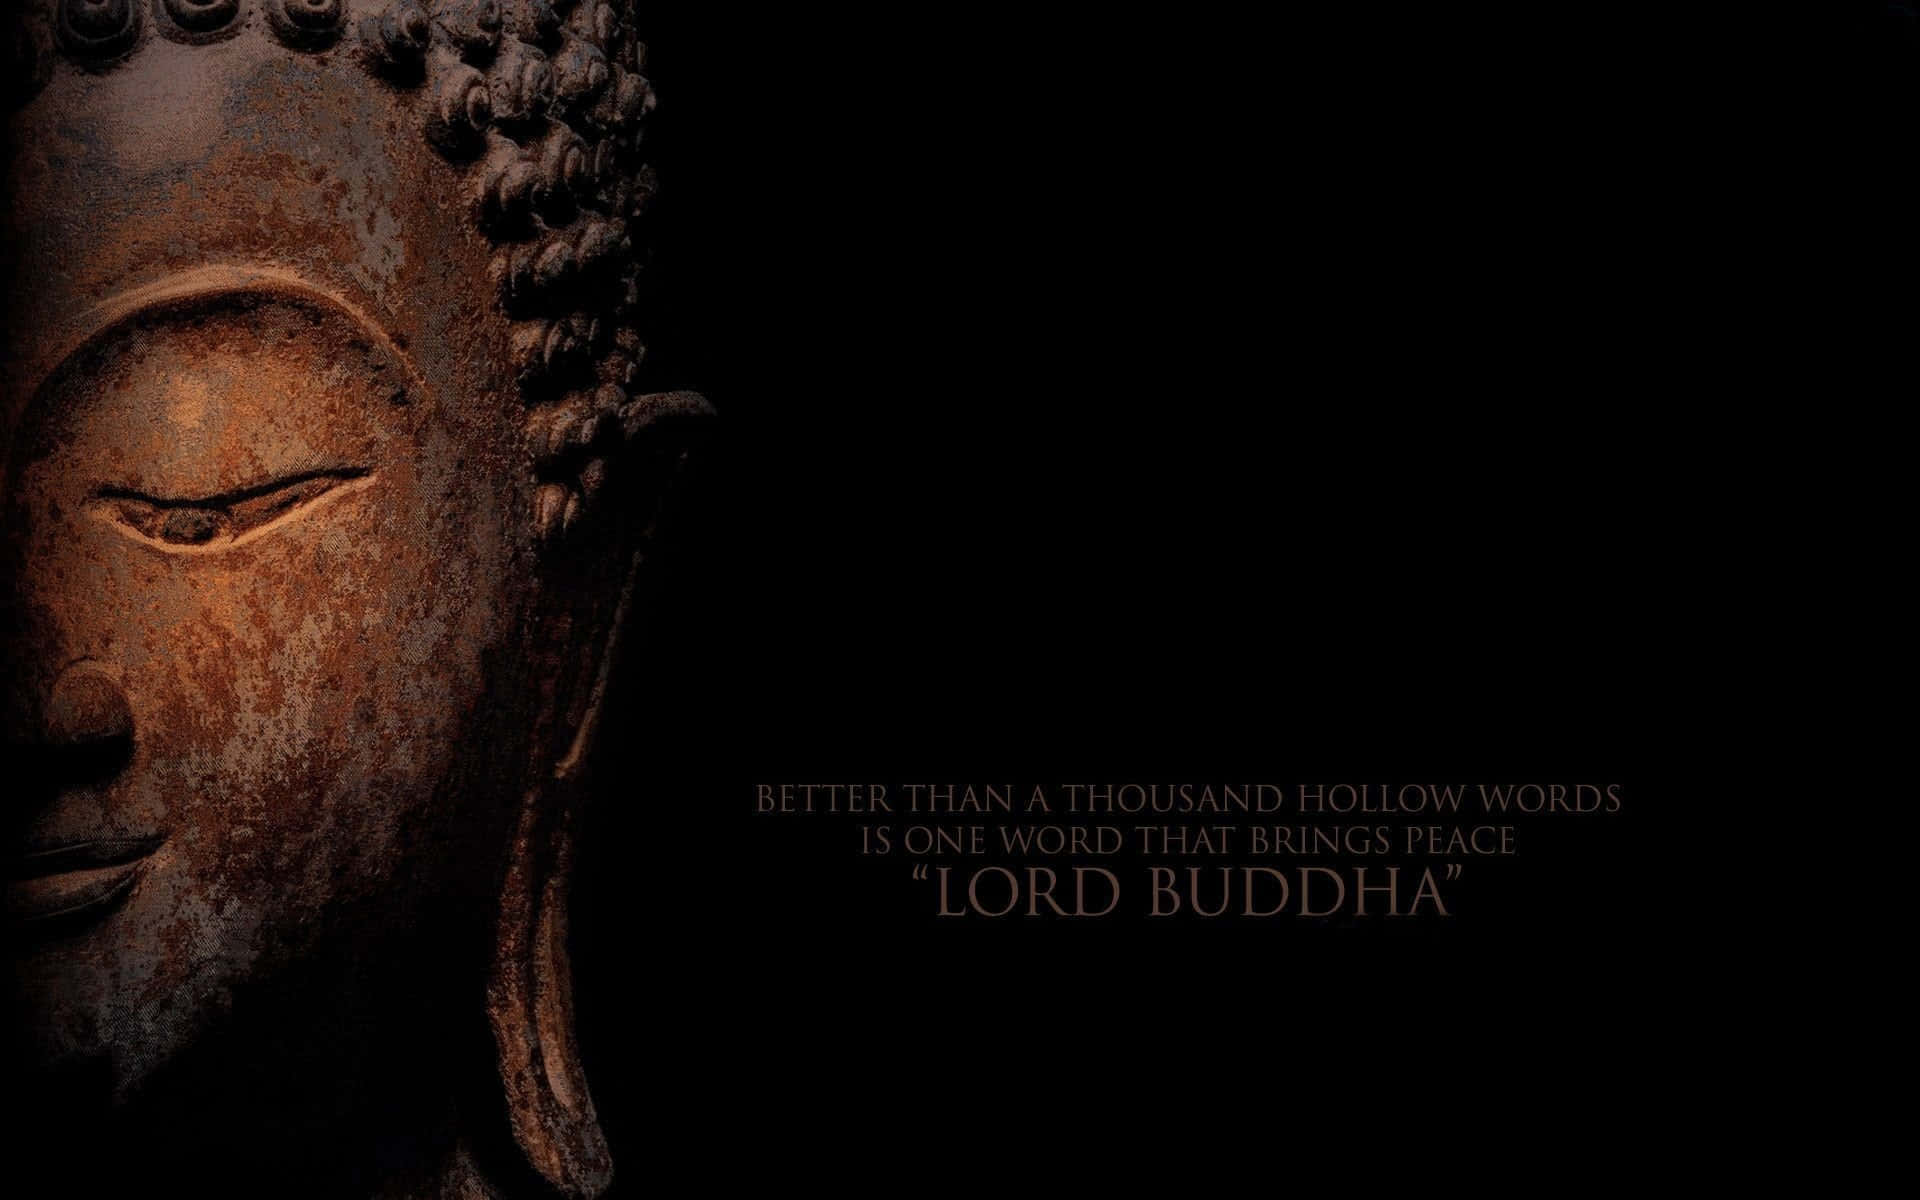 “The Way of the Buddha”